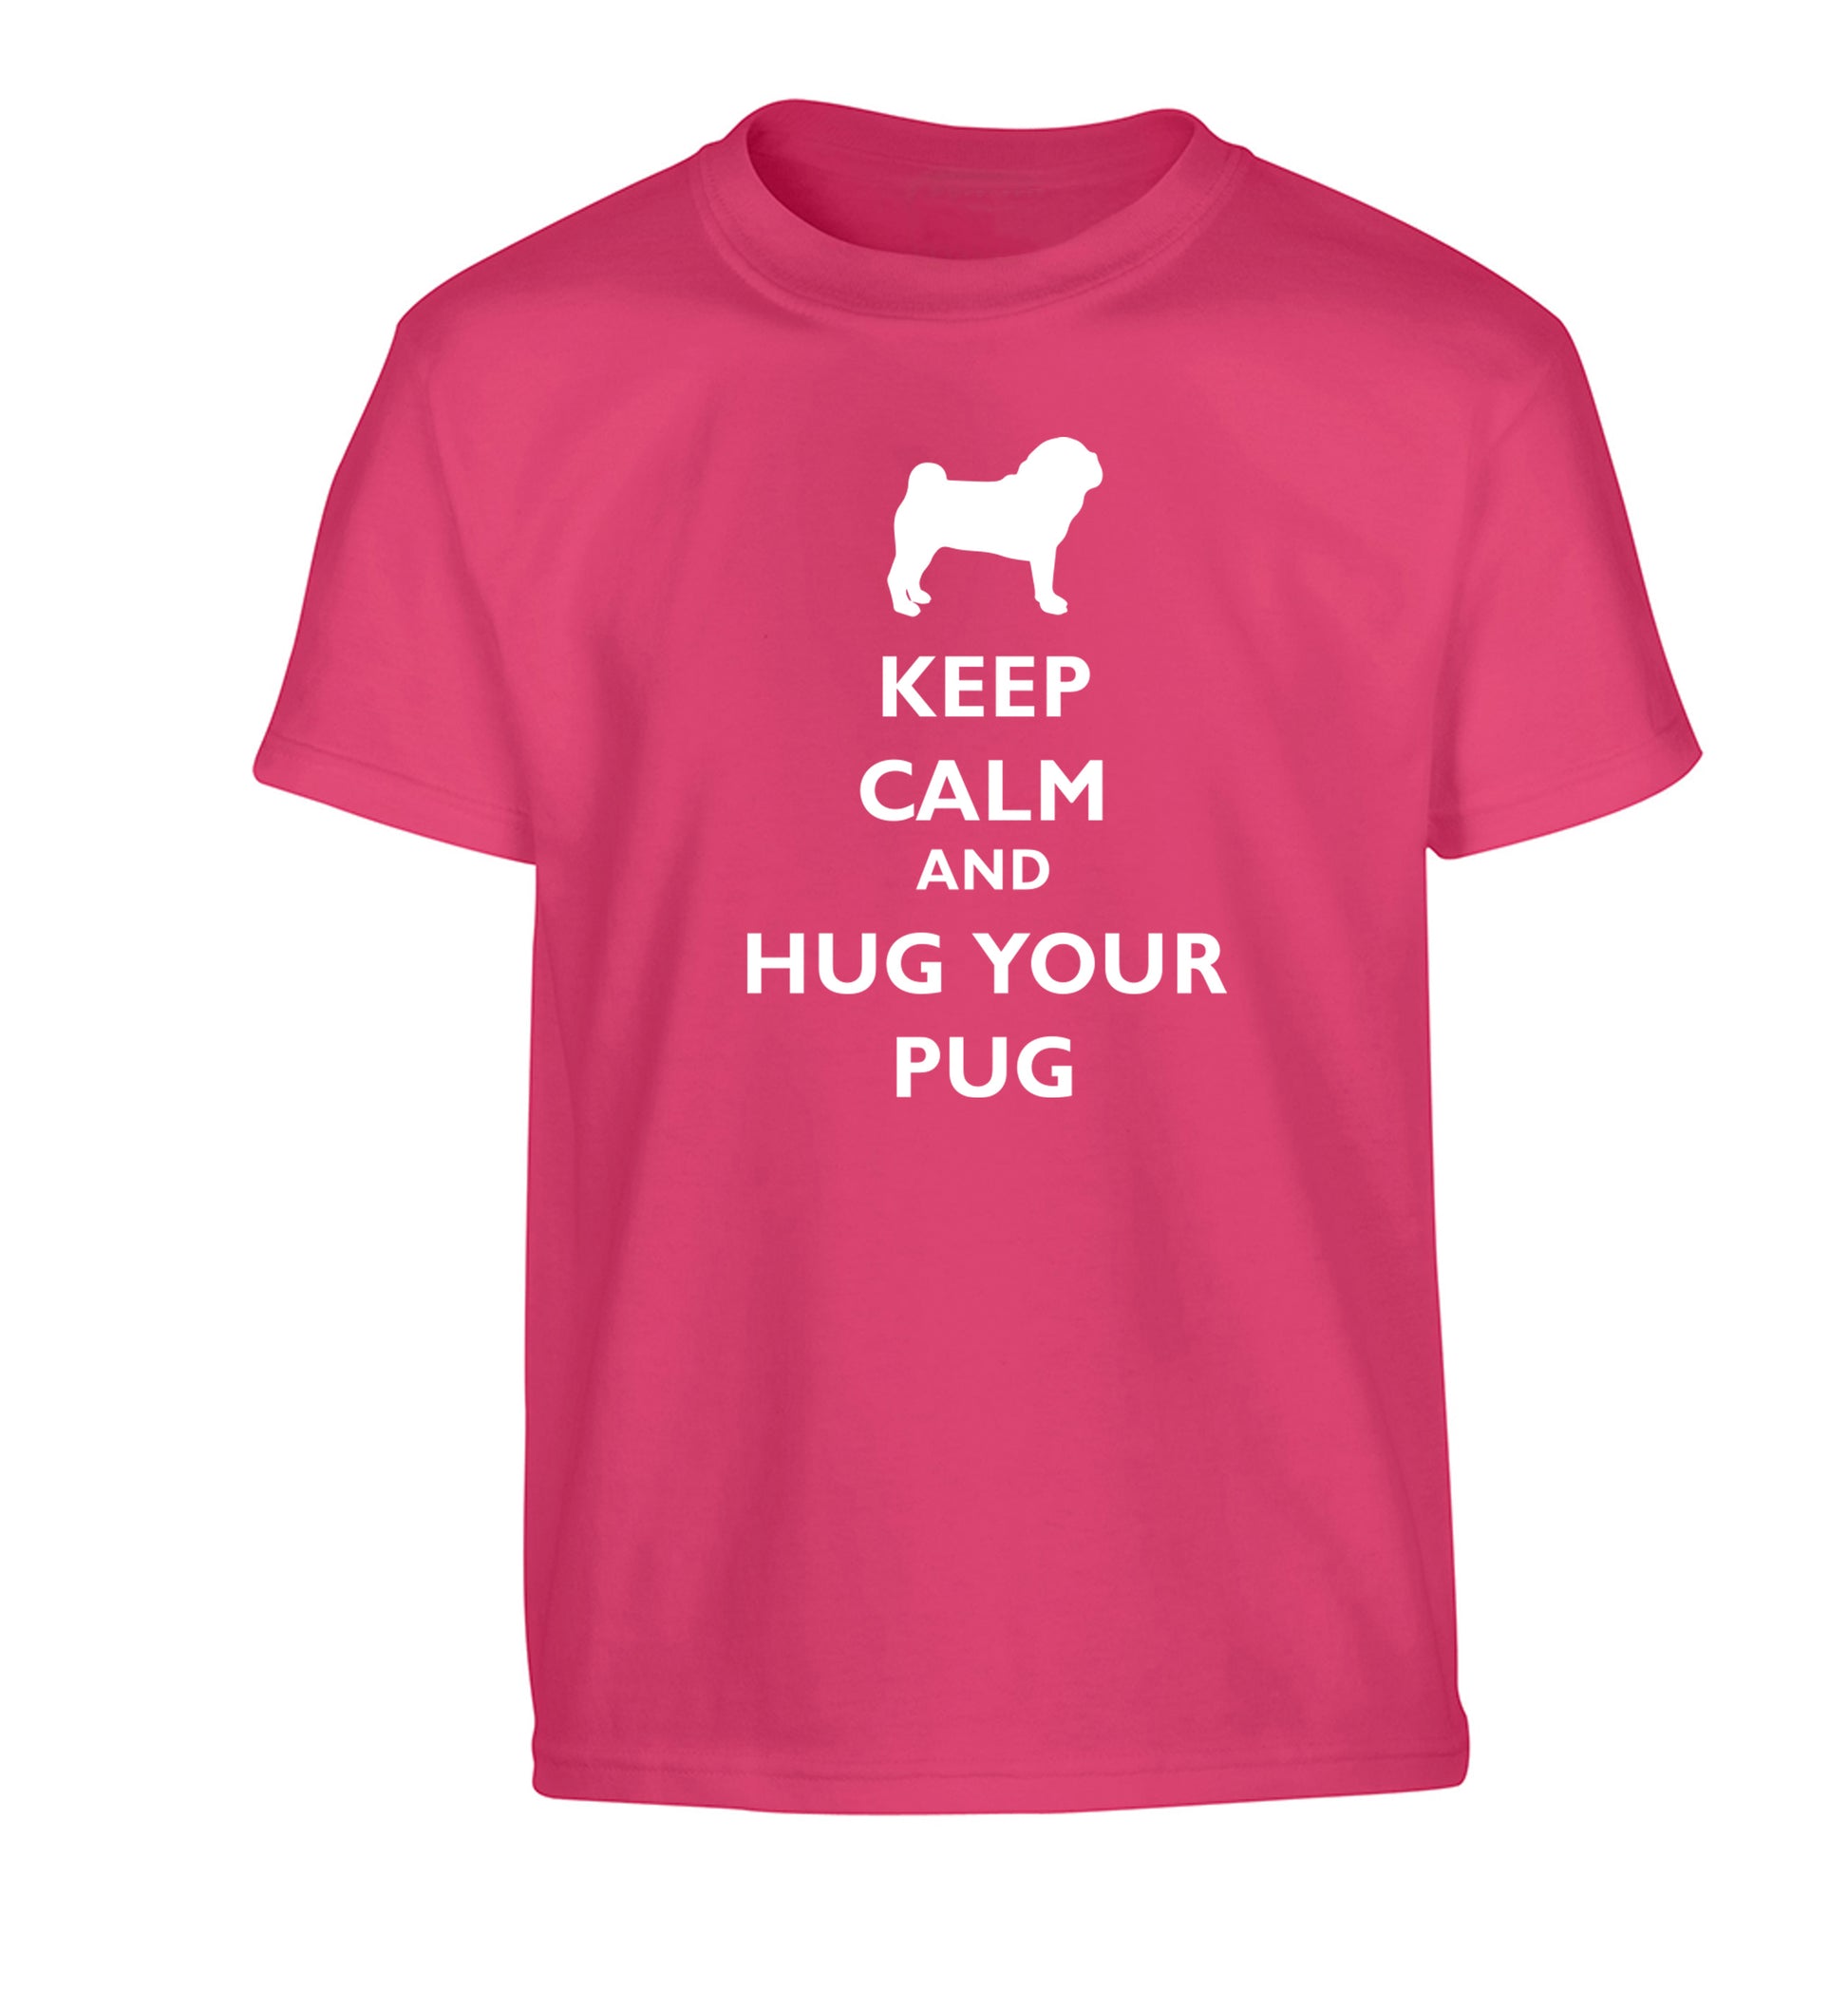 Keep calm and hug your pug Children's pink Tshirt 12-13 Years